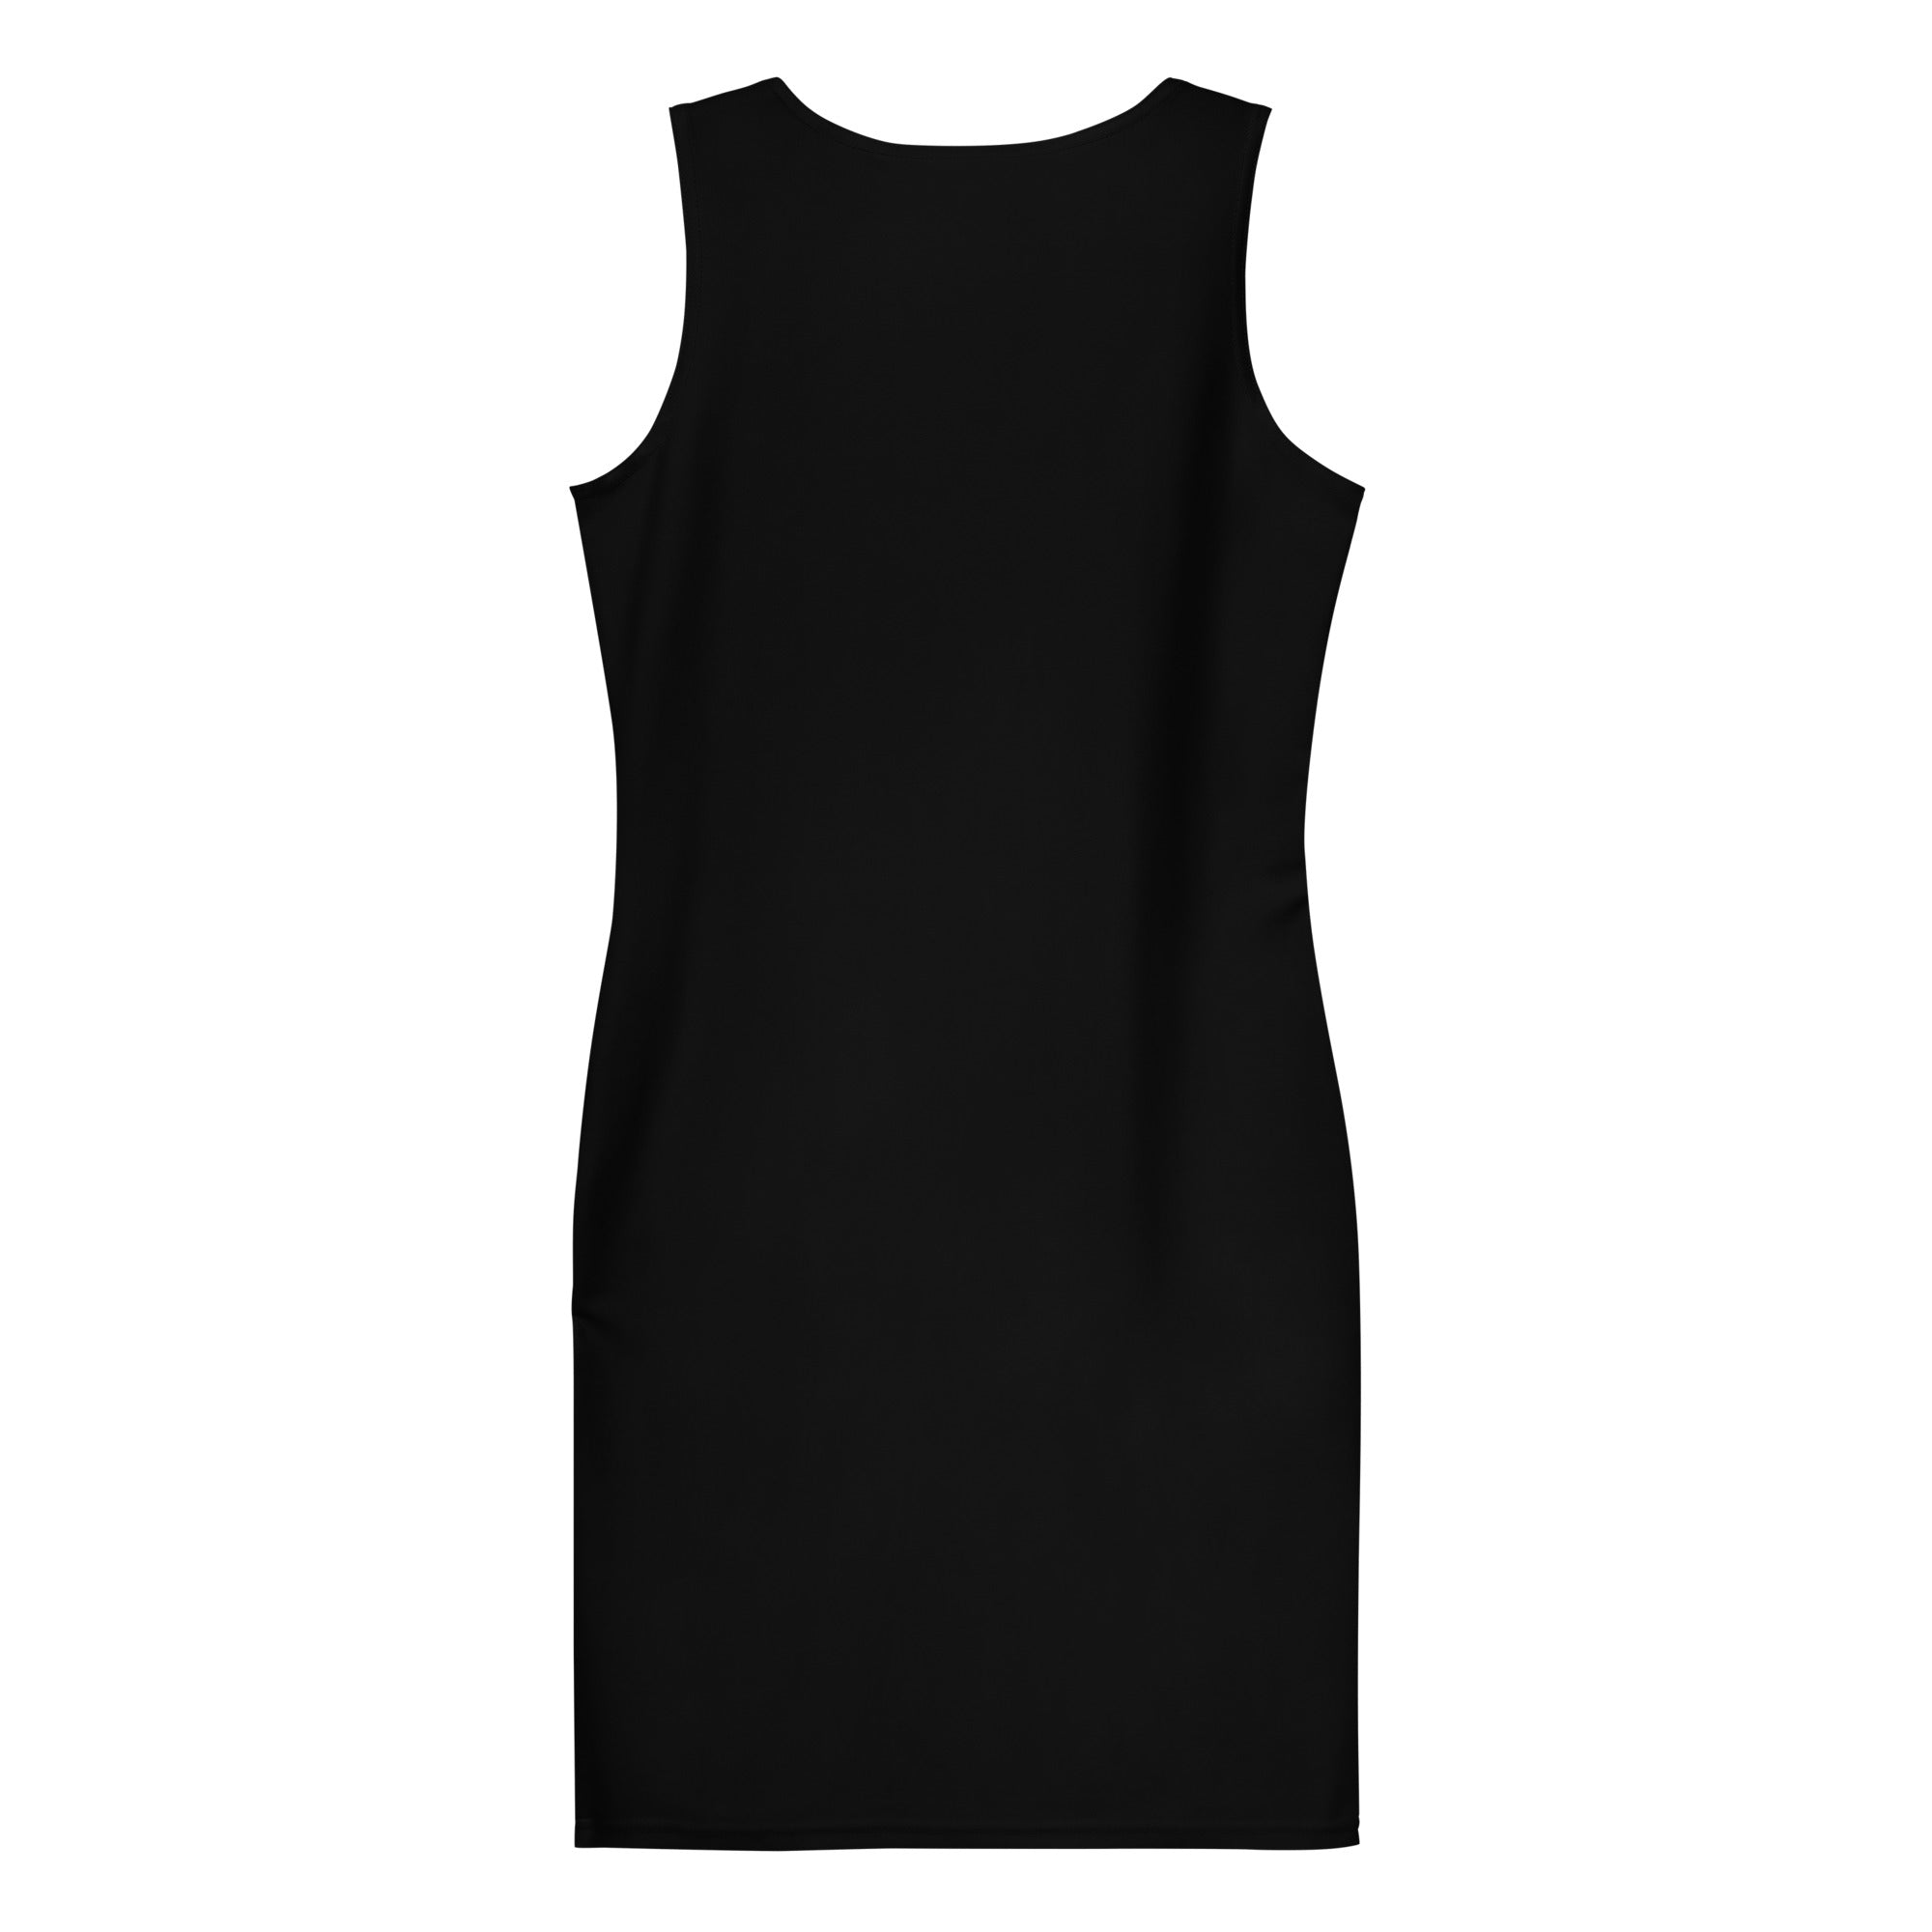 Black Bodycon Dress - Bodycon Dress - DRAGON FOXX™ - Black Bodycon Dress - 4963860_7788 - XS - Black - Bodycon Dress - Black - Black Bodycon Dress - Black Dress